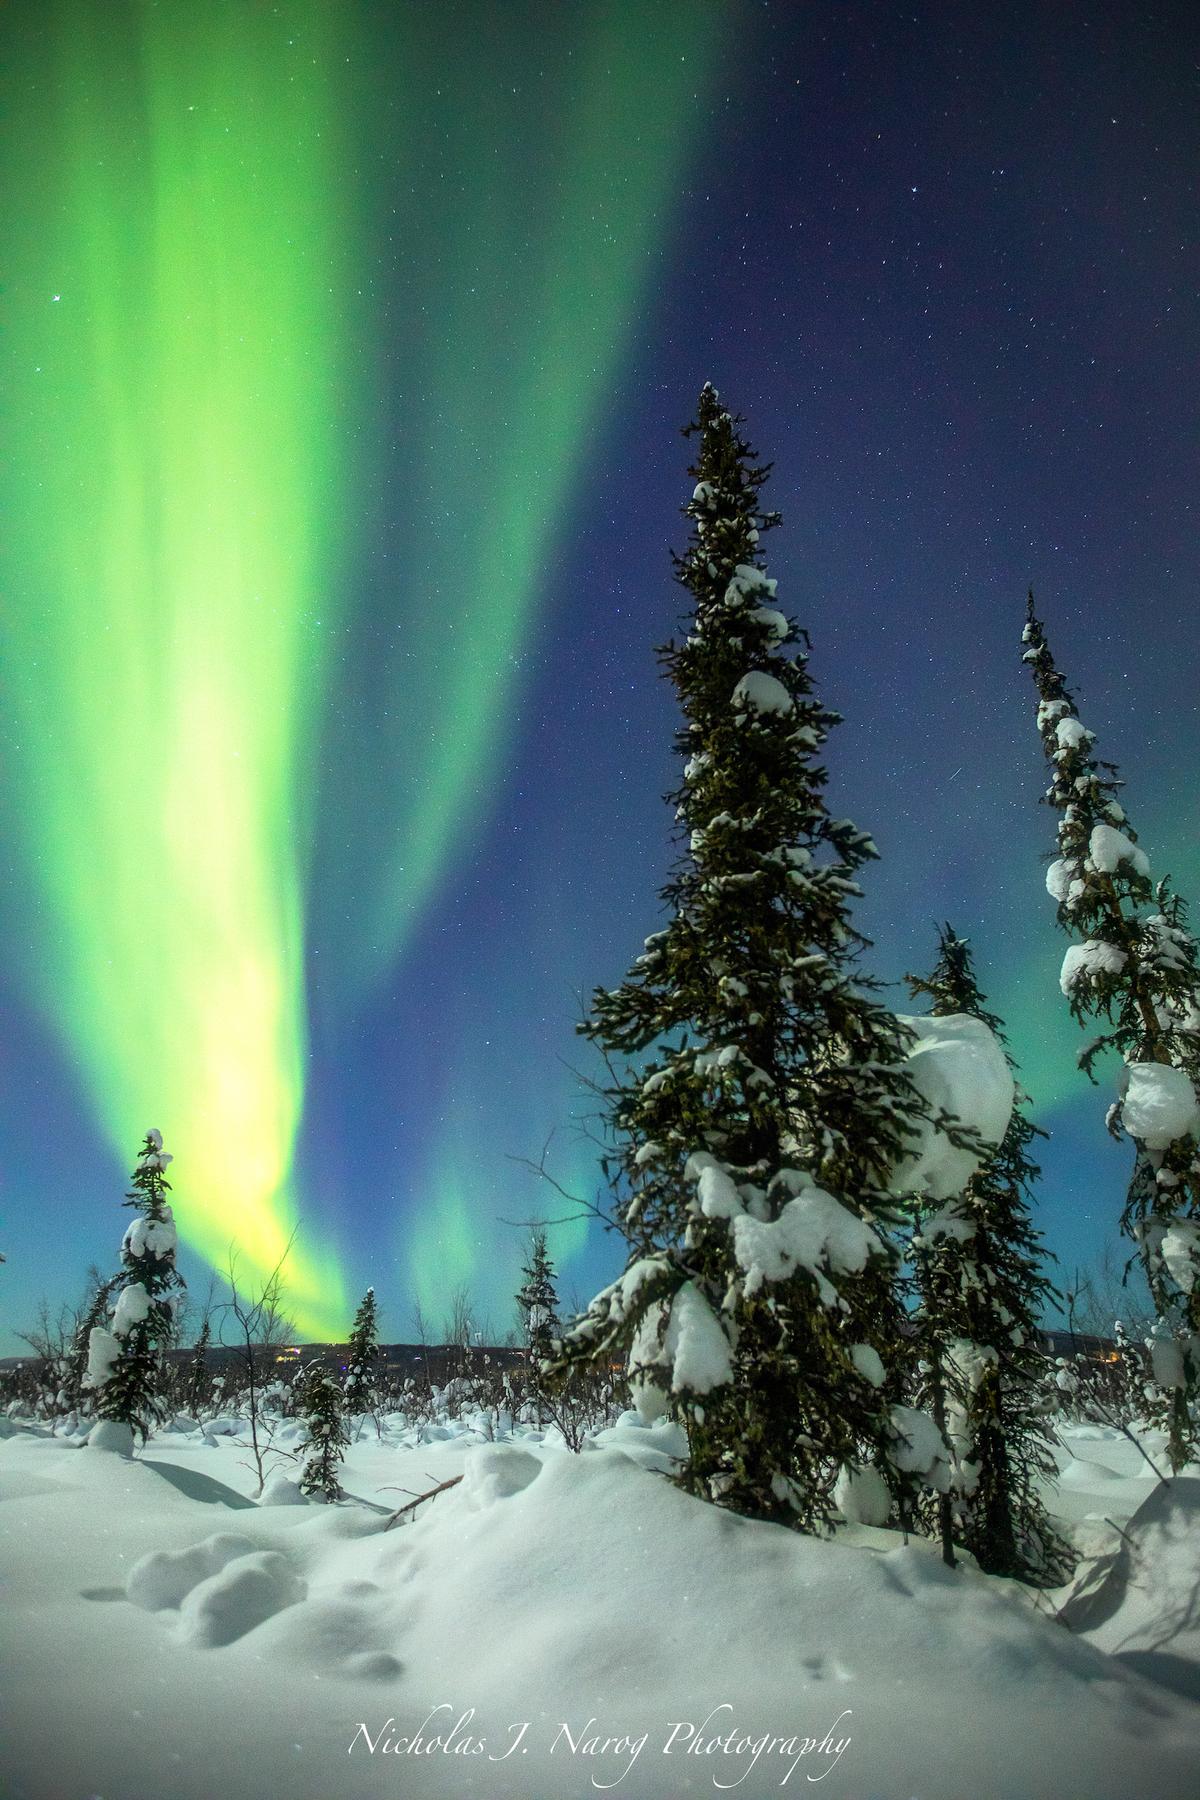 Green auroras dance over snowy woods. (Courtesy of <a href="https://www.instagram.com/nicholas_j._narog_photography/">Nicholas J. Narog Photography</a>)